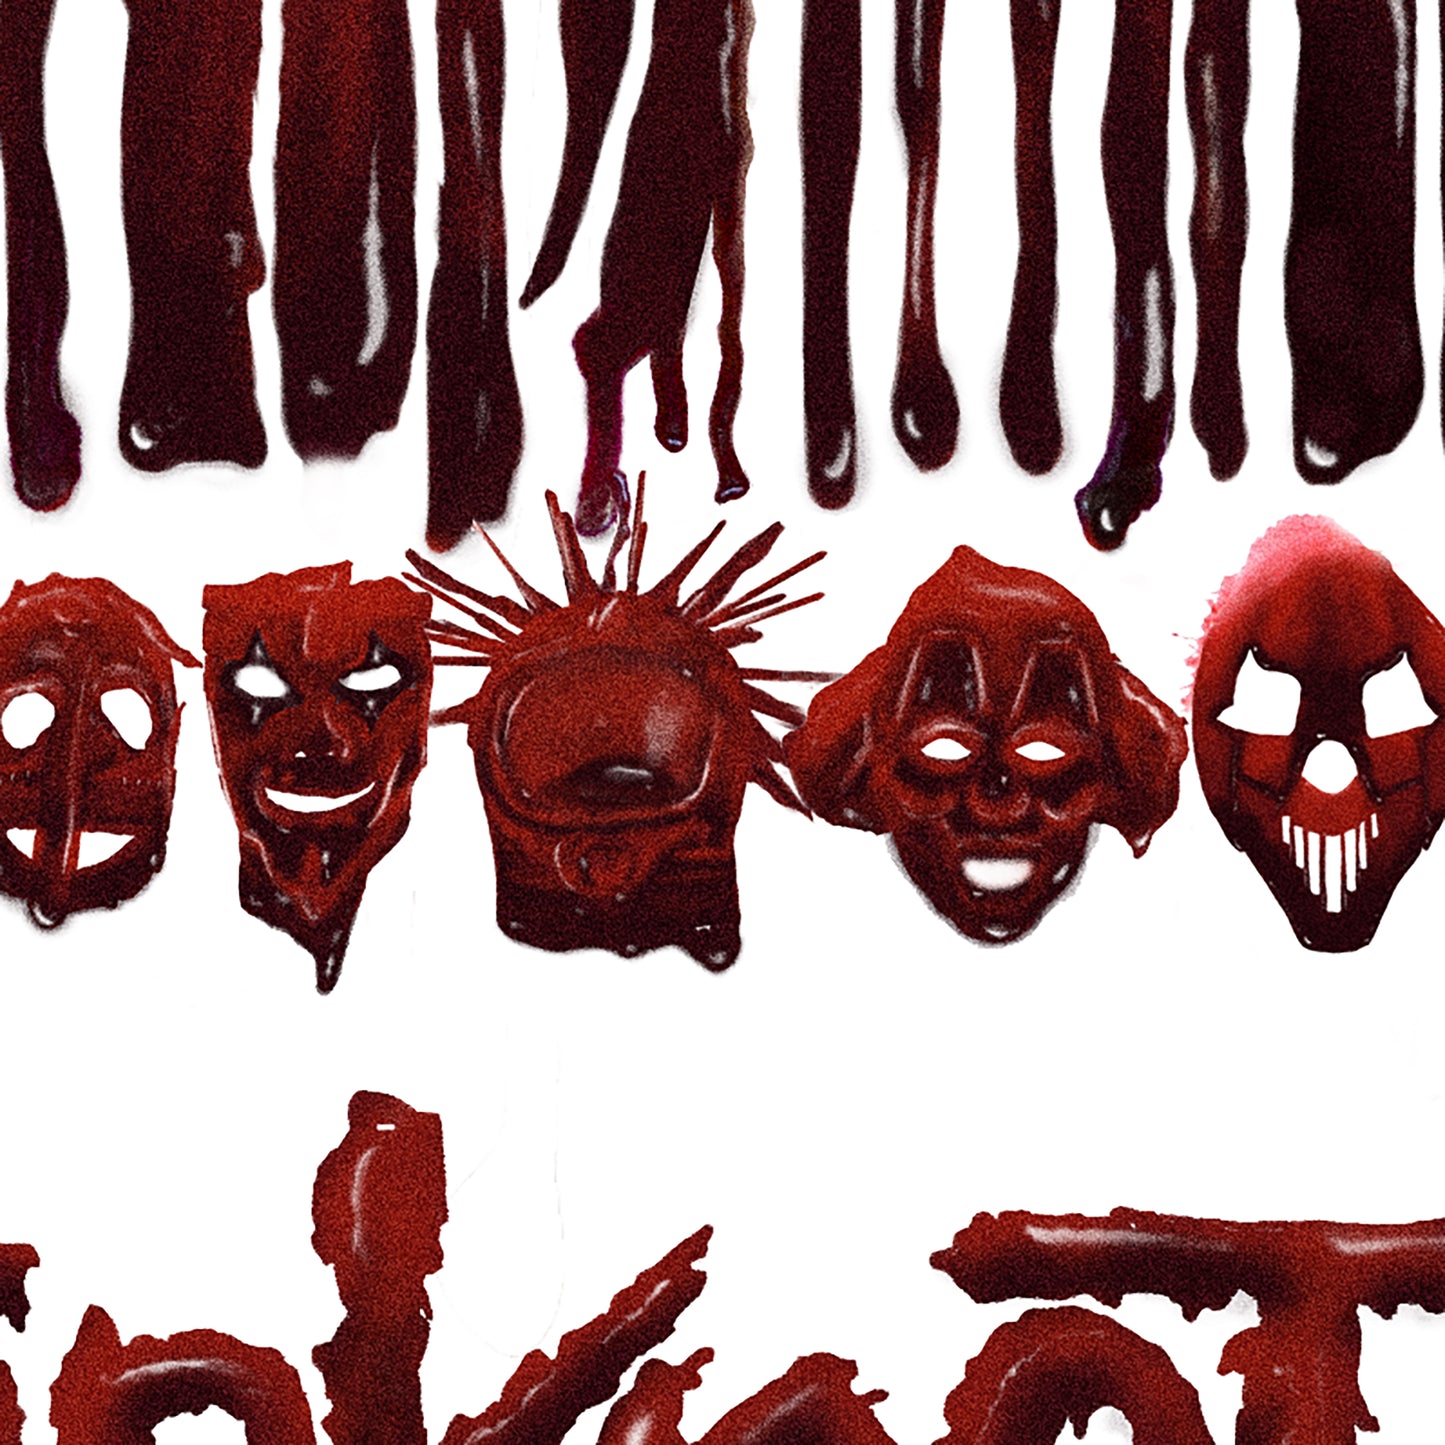 Slipknot Poster | Self-Titled 25th Anniversary Poster | Illustrated Print |